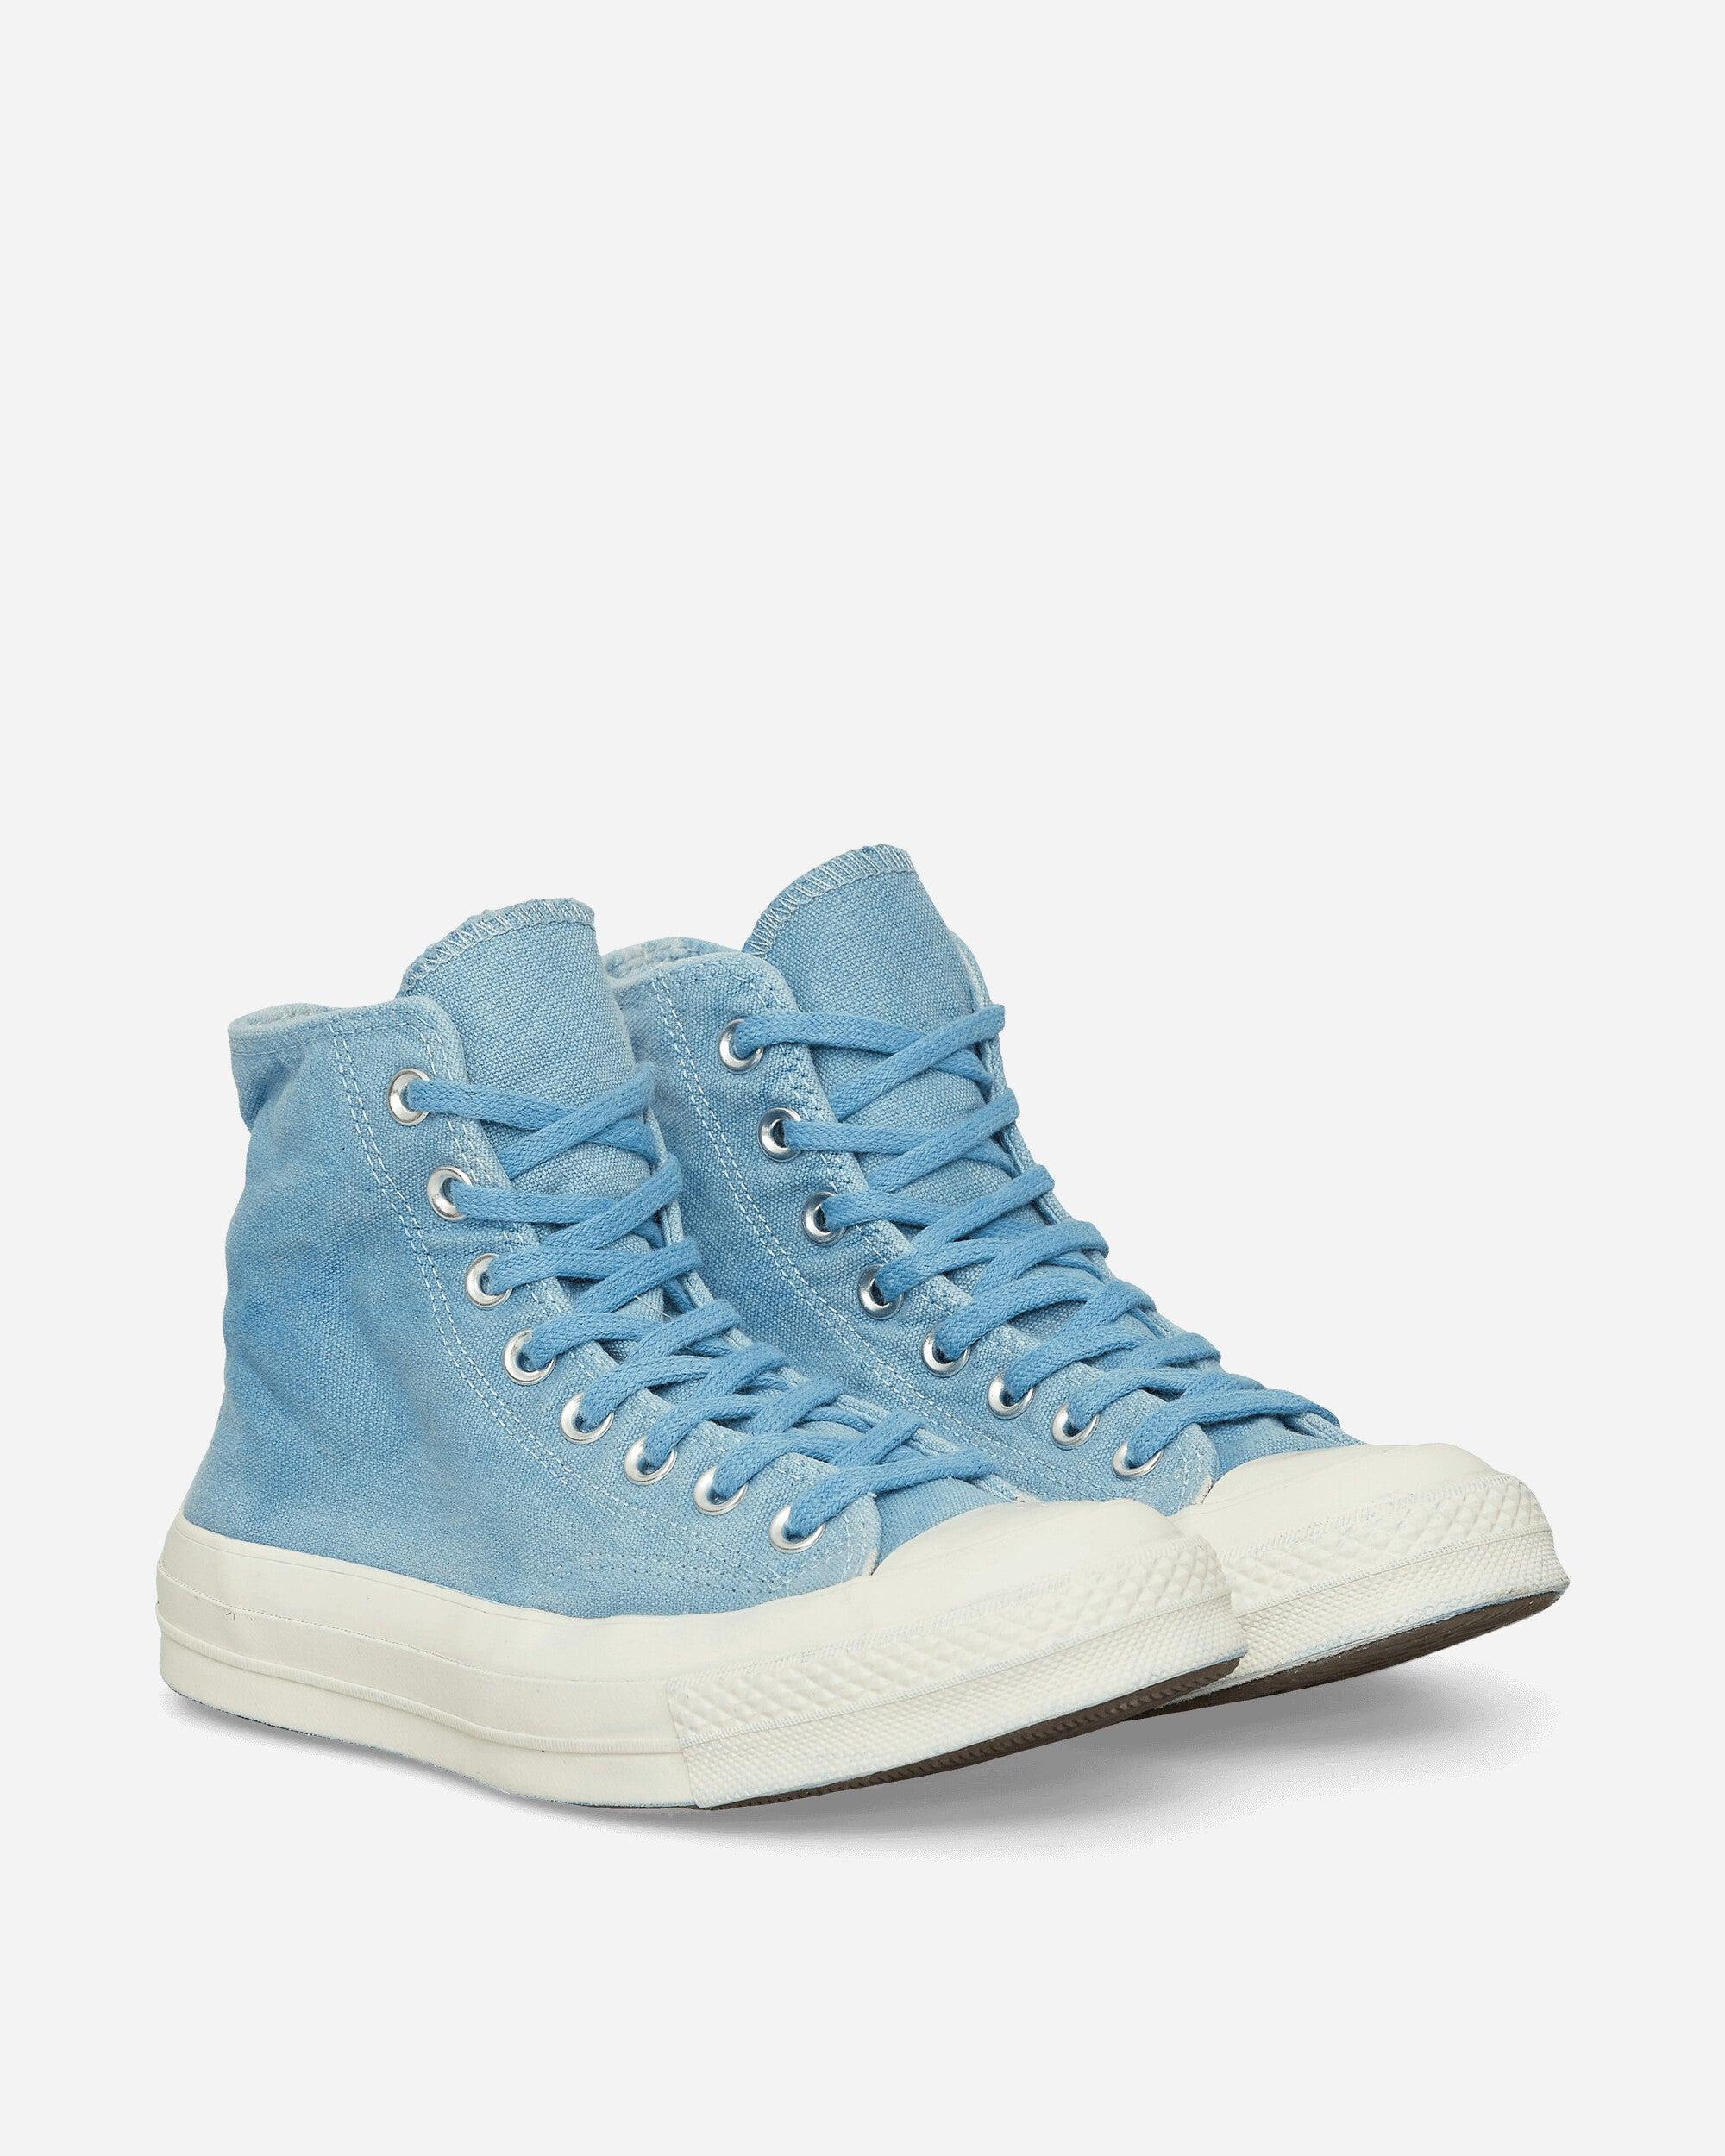 Converse Chuck 70 Ltd Indigo Dye Sneakers Blue for Men | Lyst